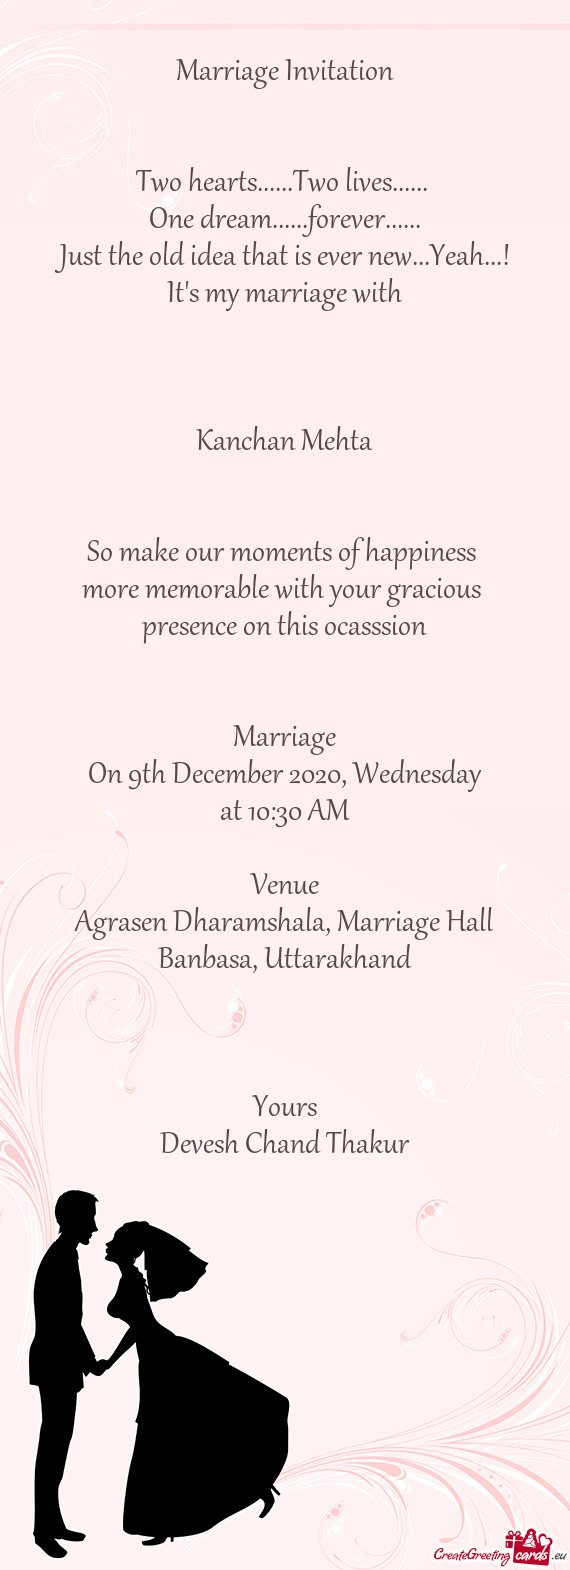 Agrasen Dharamshala, Marriage Hall